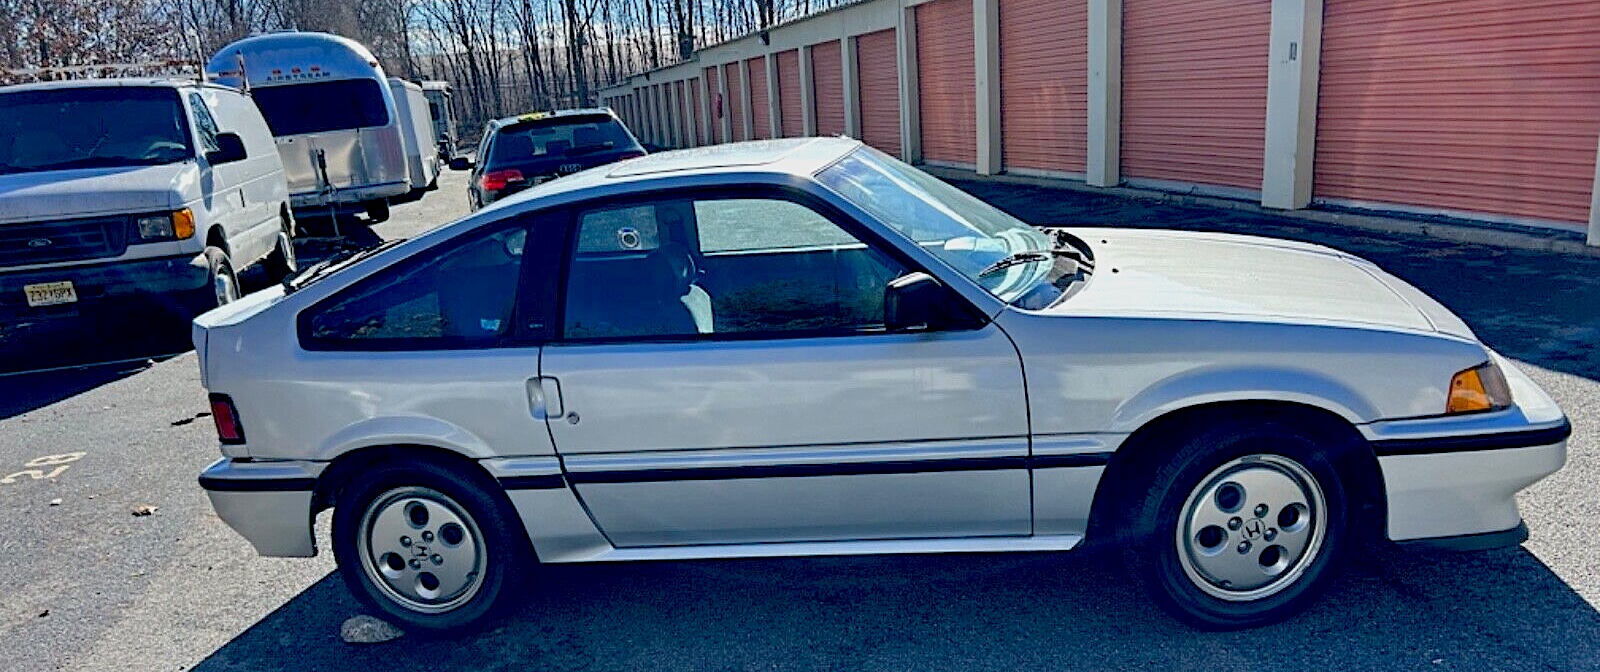 1987 Honda CRX Si - right side